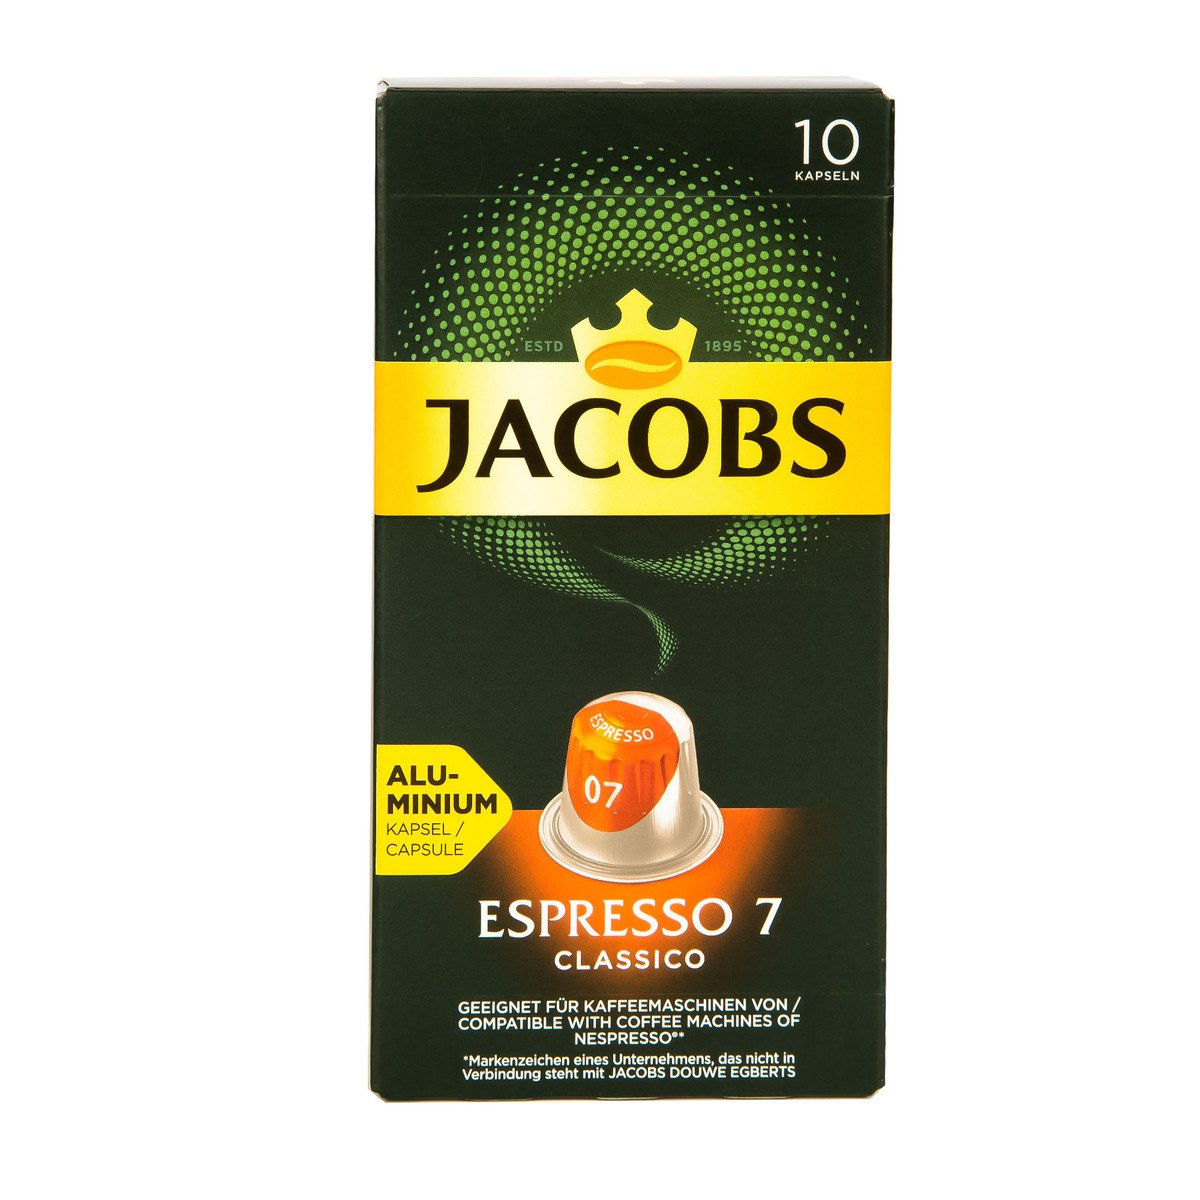 Jacobs Espresso 7 Classico Coffee Capsule 10 pcs